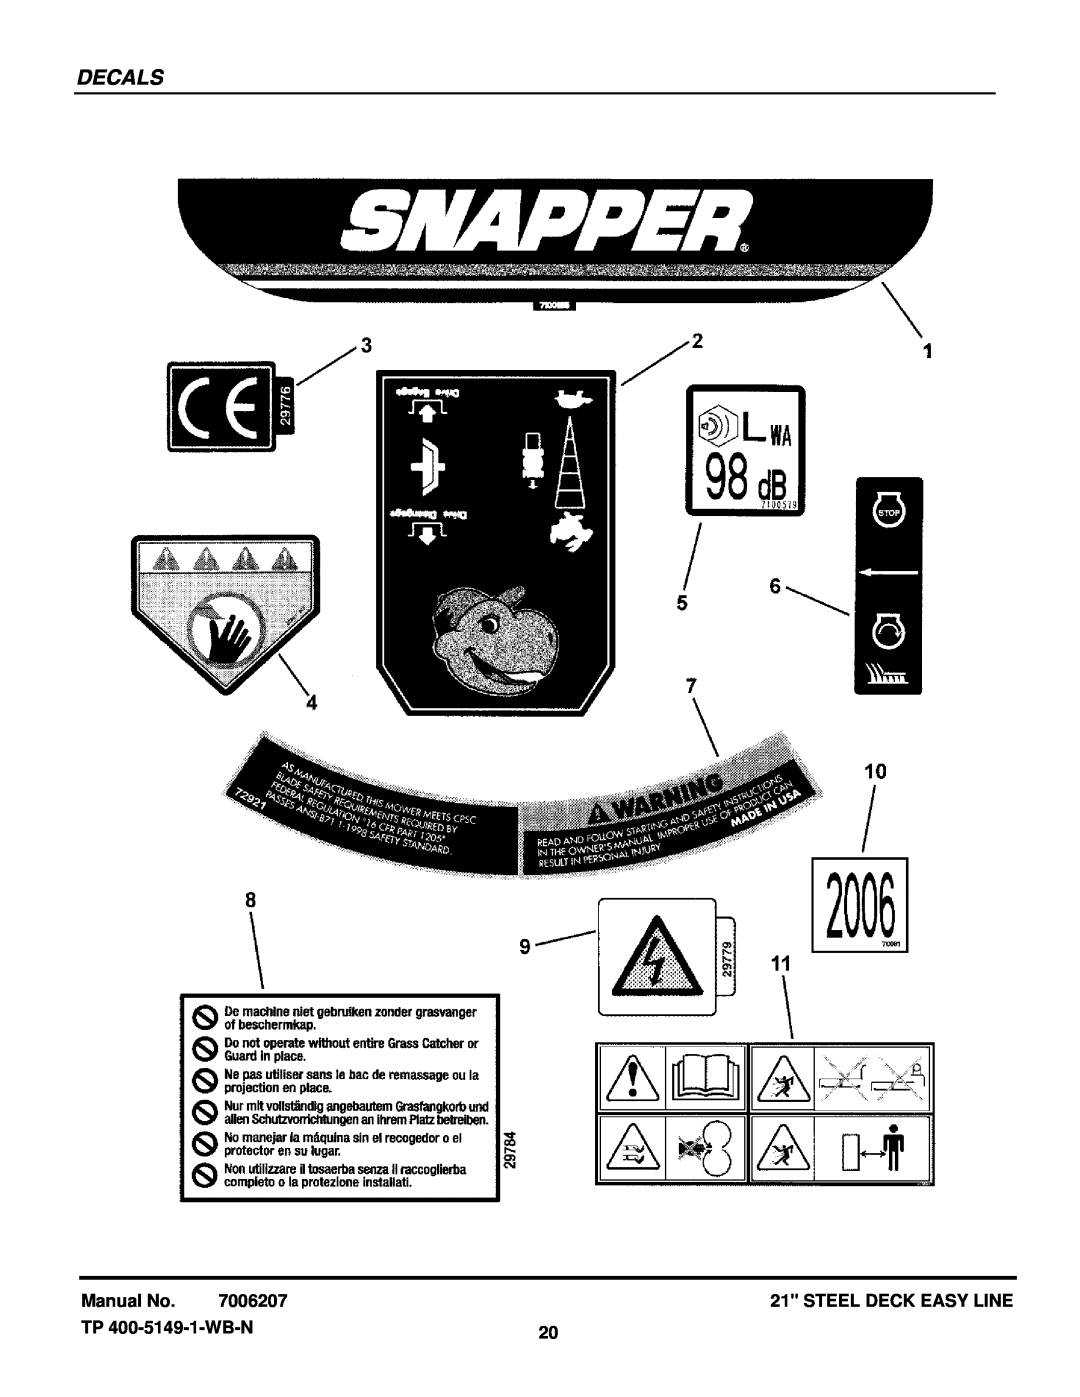 Snapper ESPV211 manual Decals, Manual No, 7006207, Steel Deck Easy Line, TP 400-5149-1-WB-N 